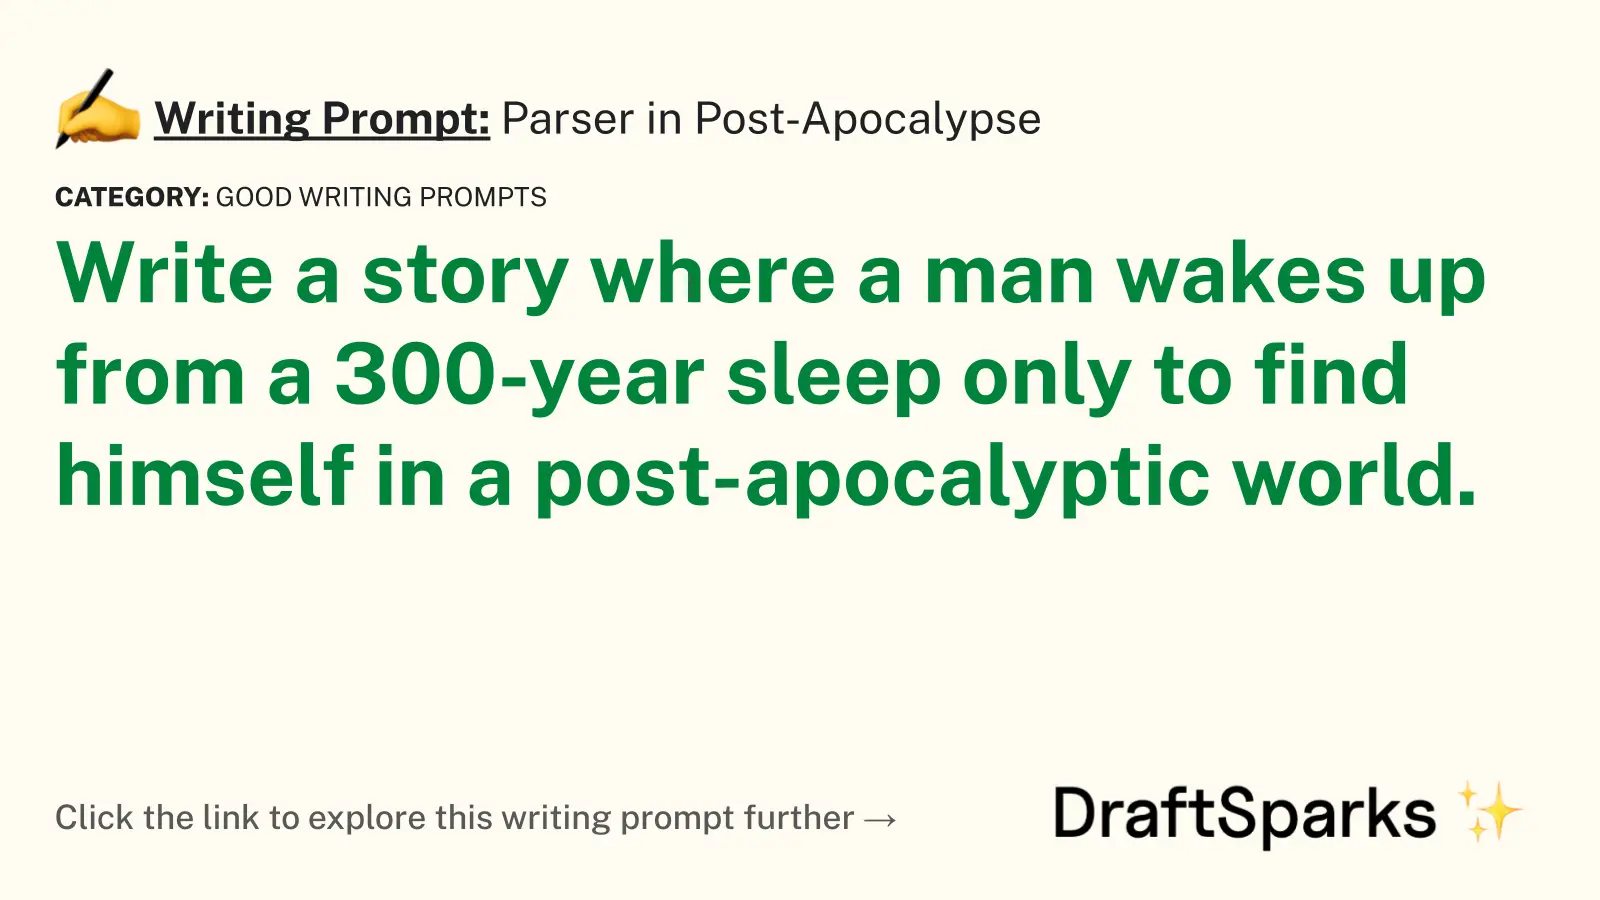 Parser in Post-Apocalypse